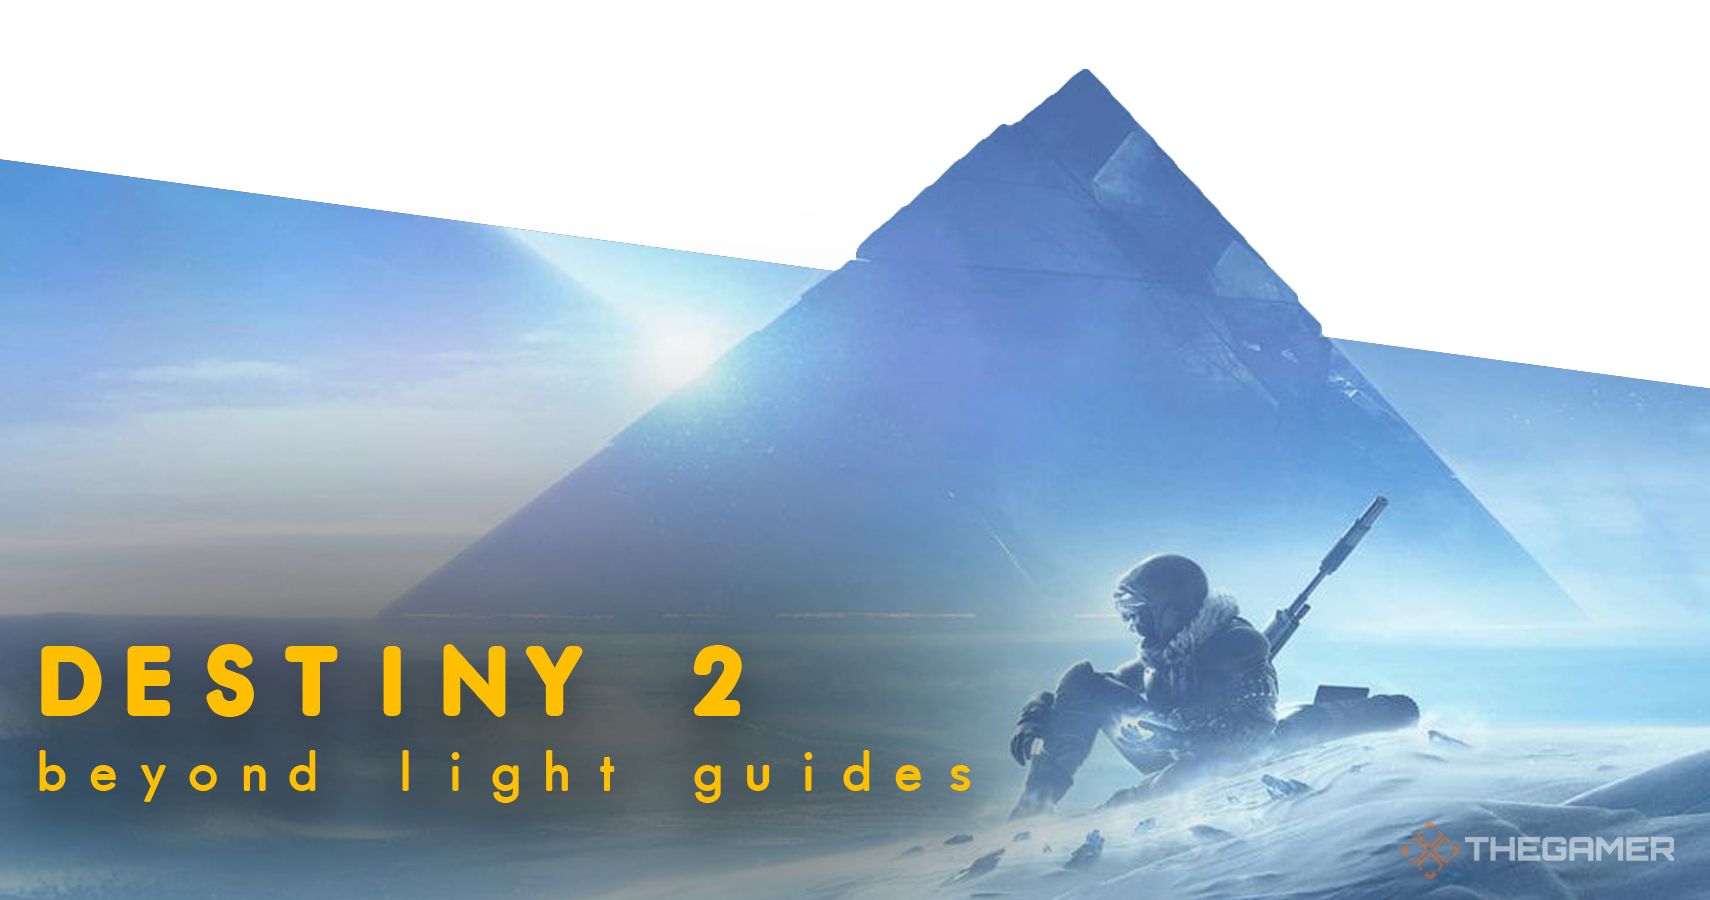 Destiny 2 beyond light guides